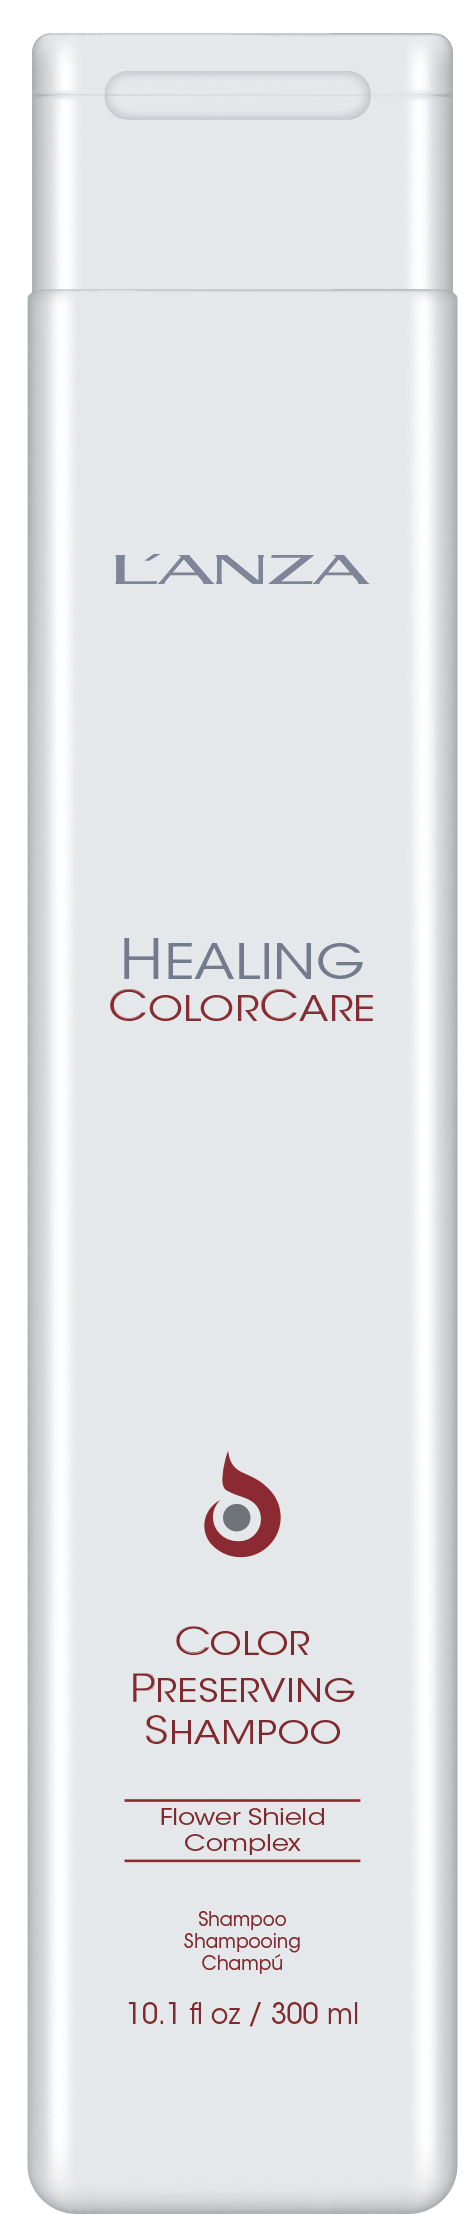 L'ANZA Healing Colorcare Preserving Shampoo